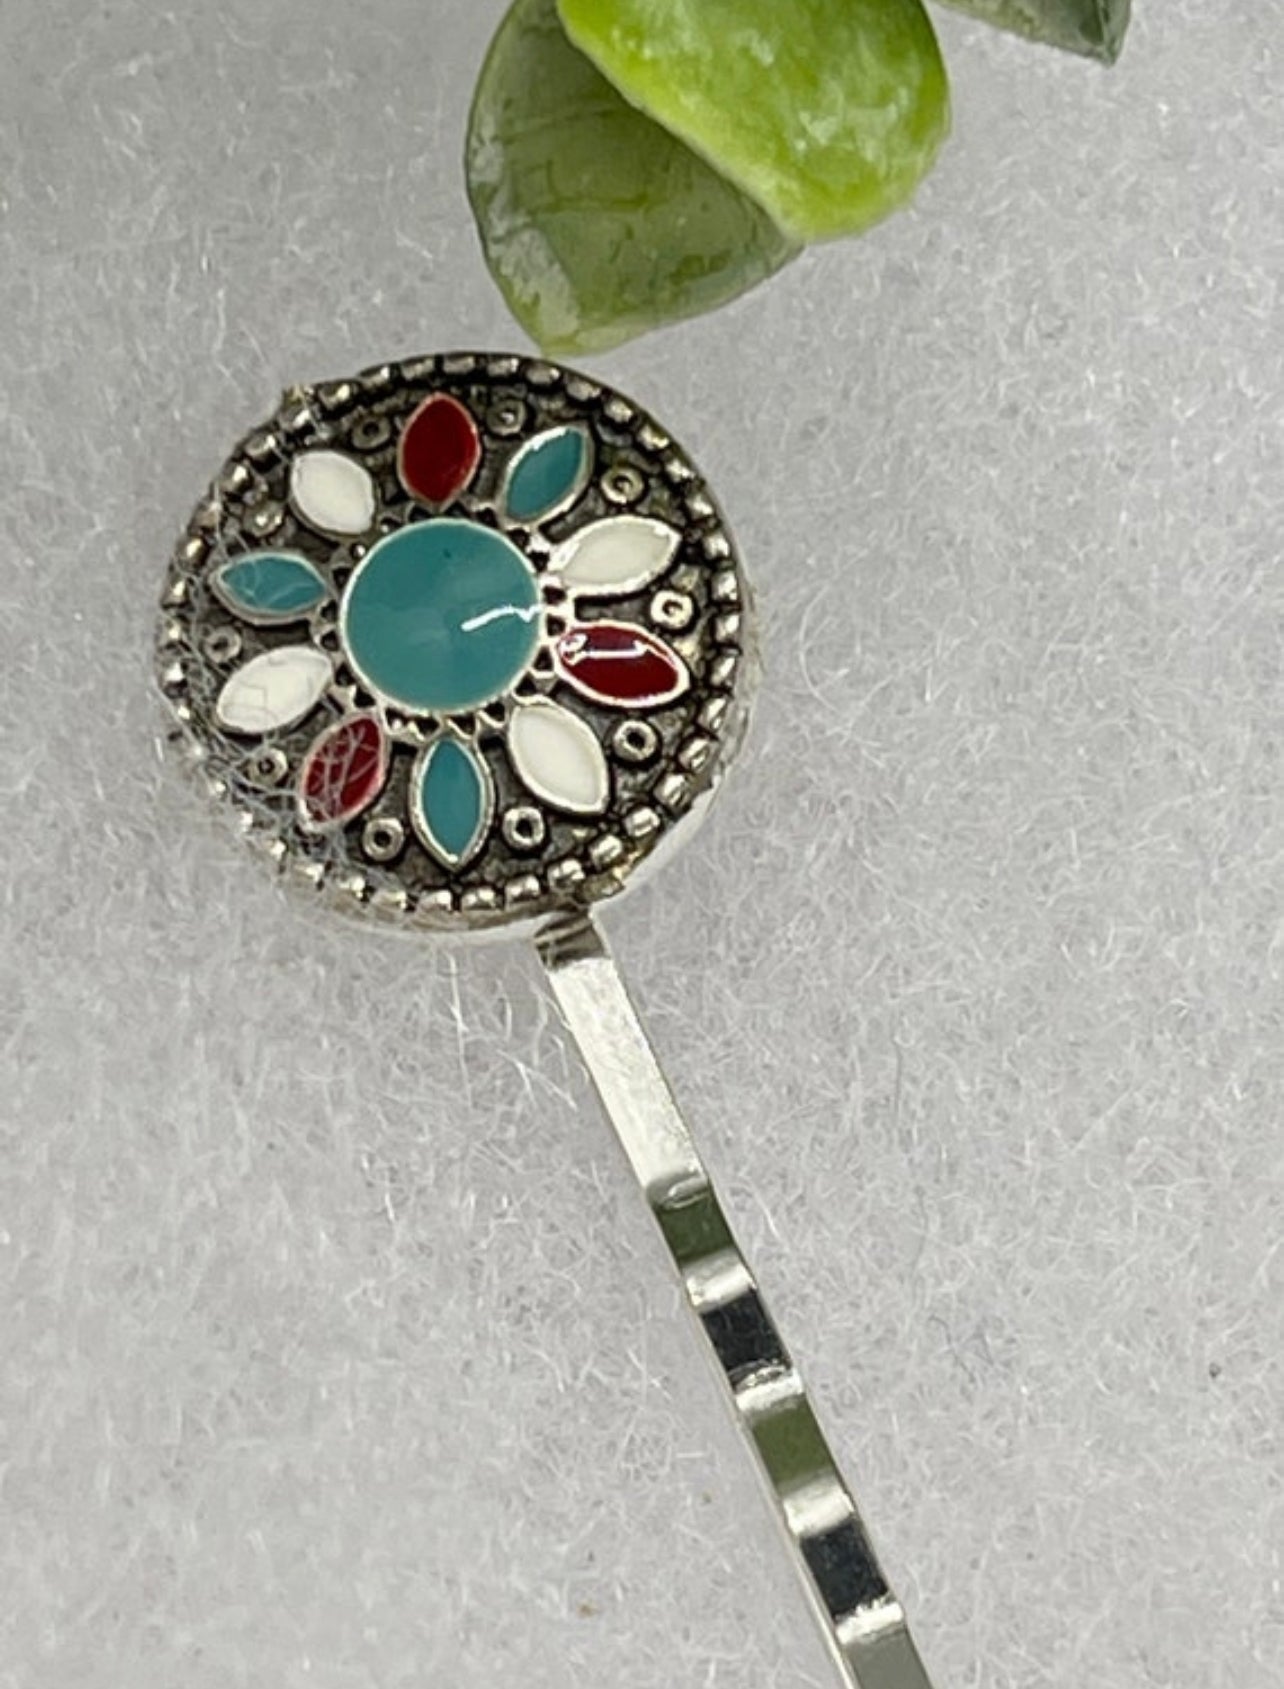 Turquoise swirl enamel vintage antique style hair pin approximately 2.5” long Handmade hair accessory bridal wedding Retro